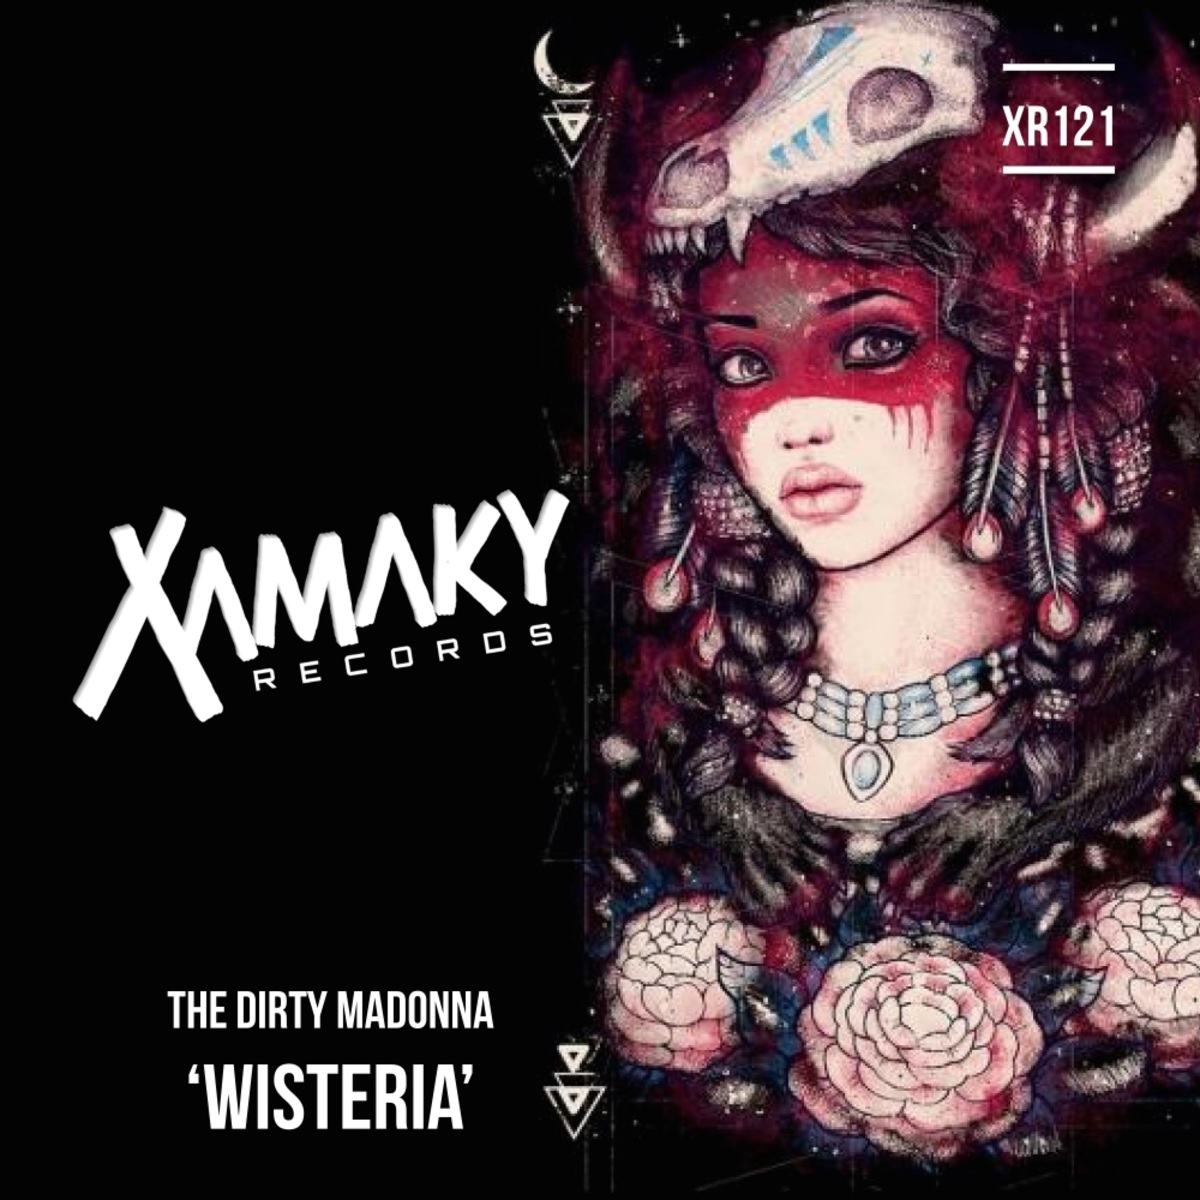 The Dirty Madonna - Wisteria / Xamaky Records